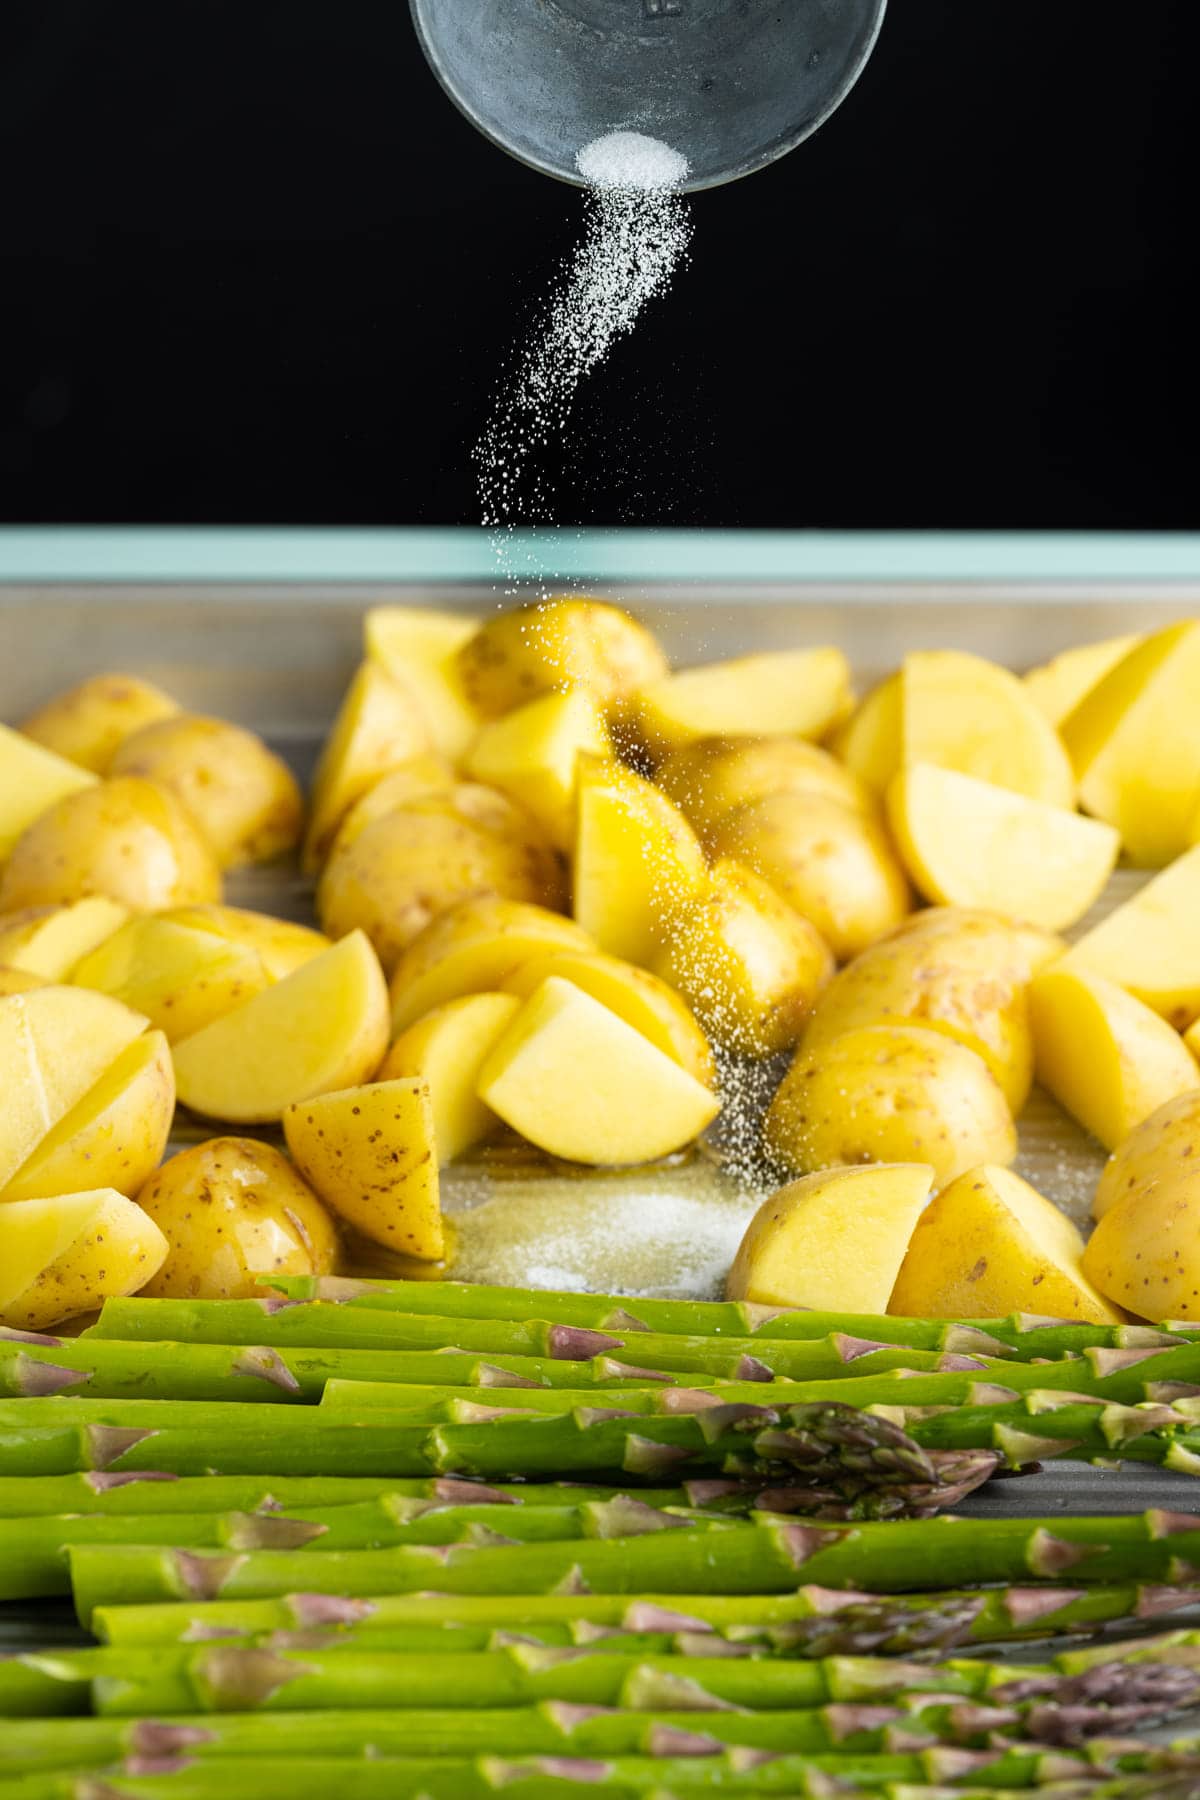 Adding salt to asparagus and potatoes on a sheet pan